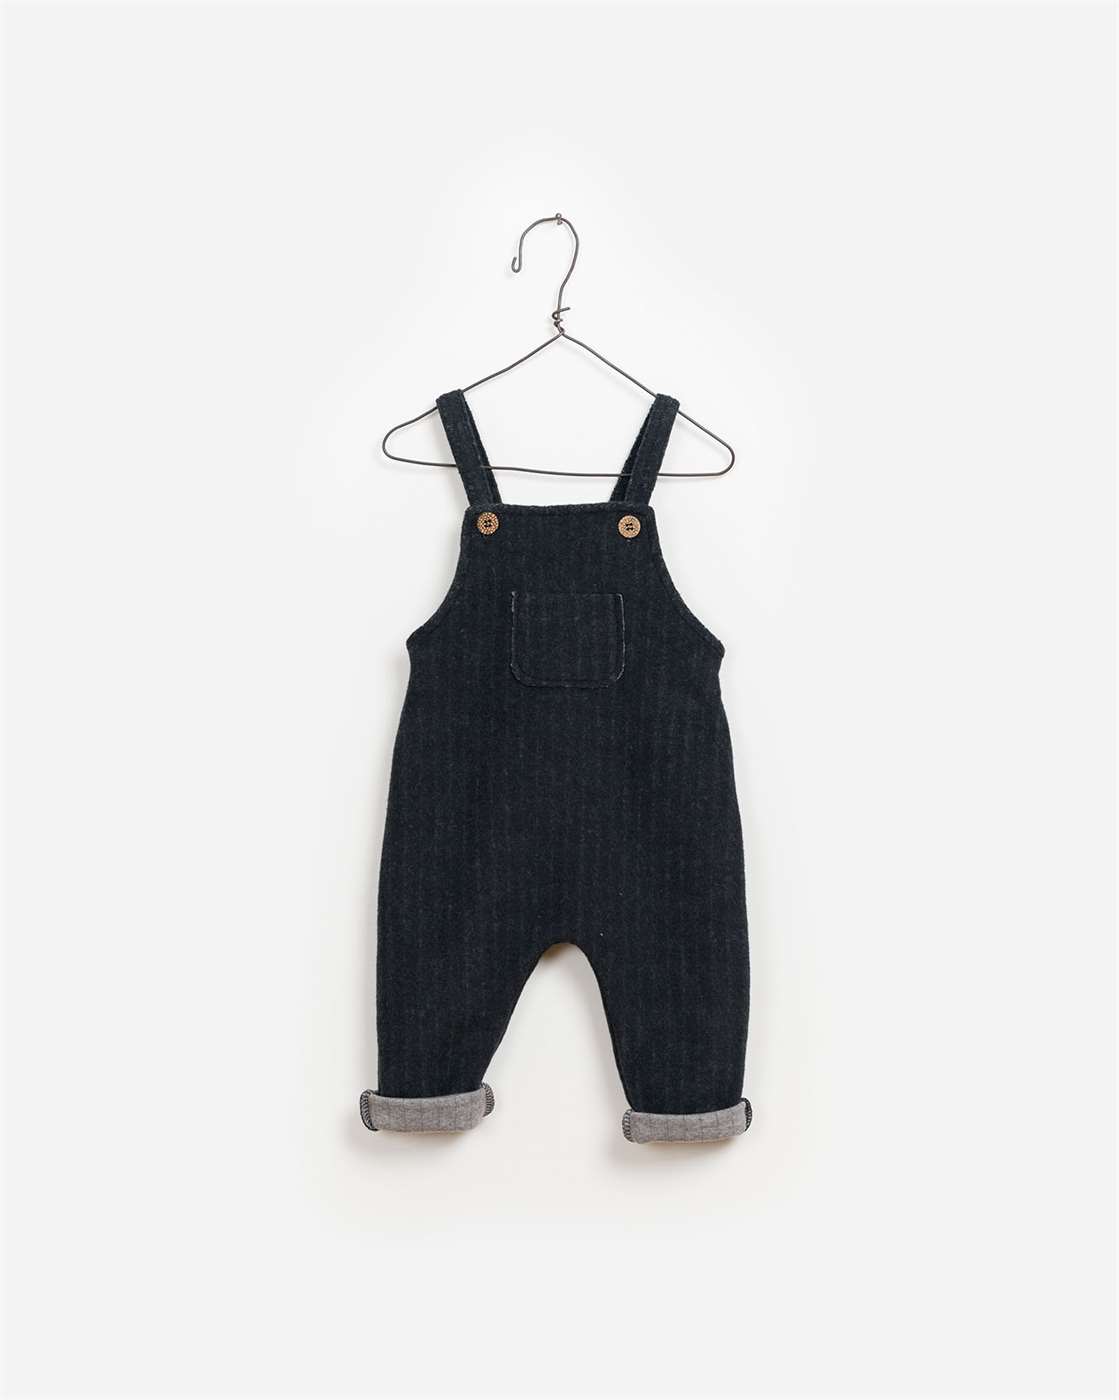 BeeBoo|BeeBoo PlayUp vêtements bébé baby clothes salopette overall Felpa coton bio organic cotton noire black